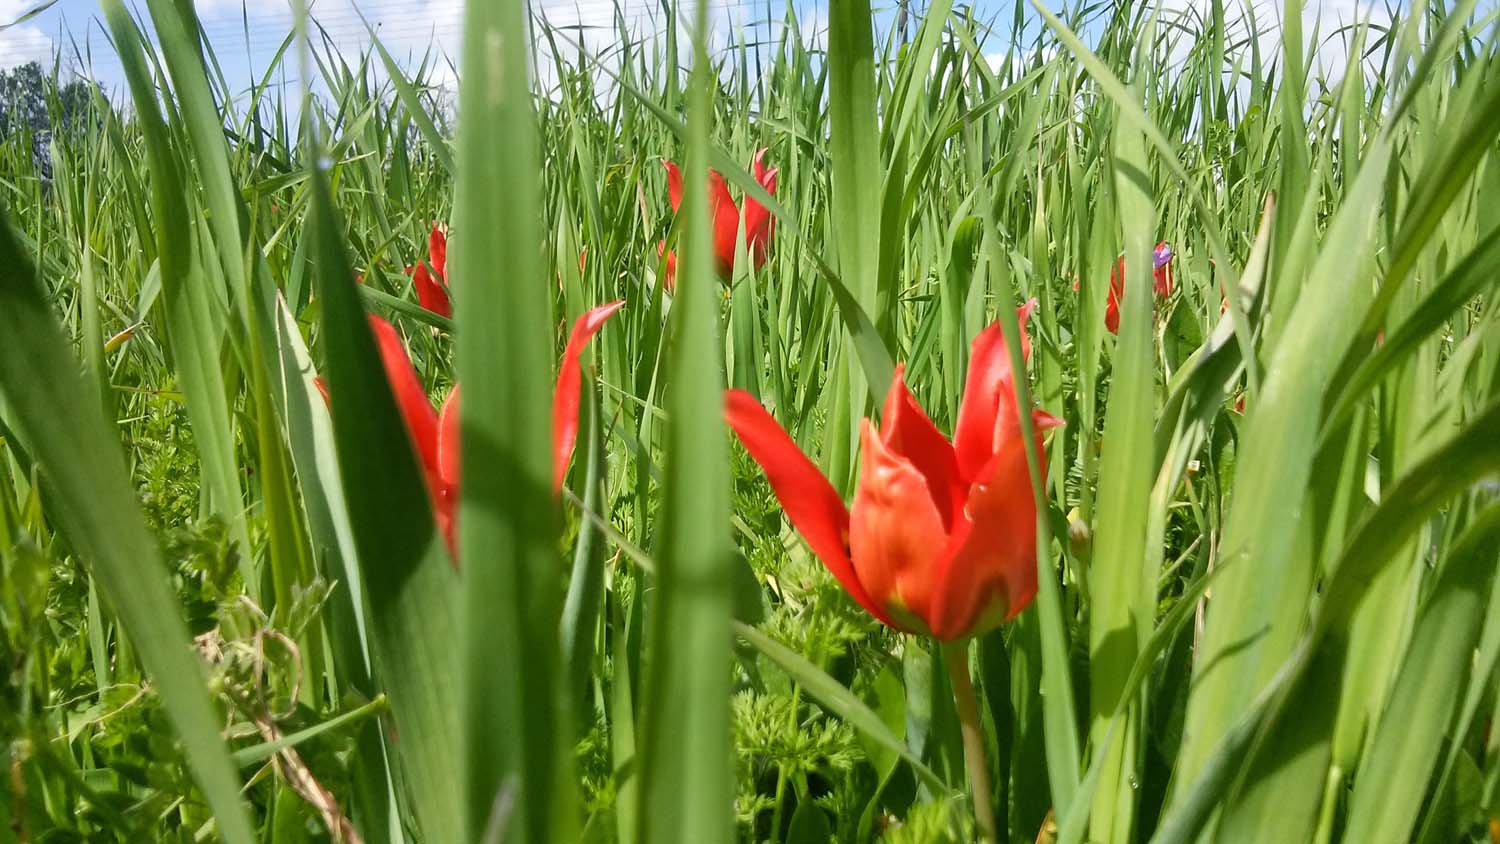 tulips_1